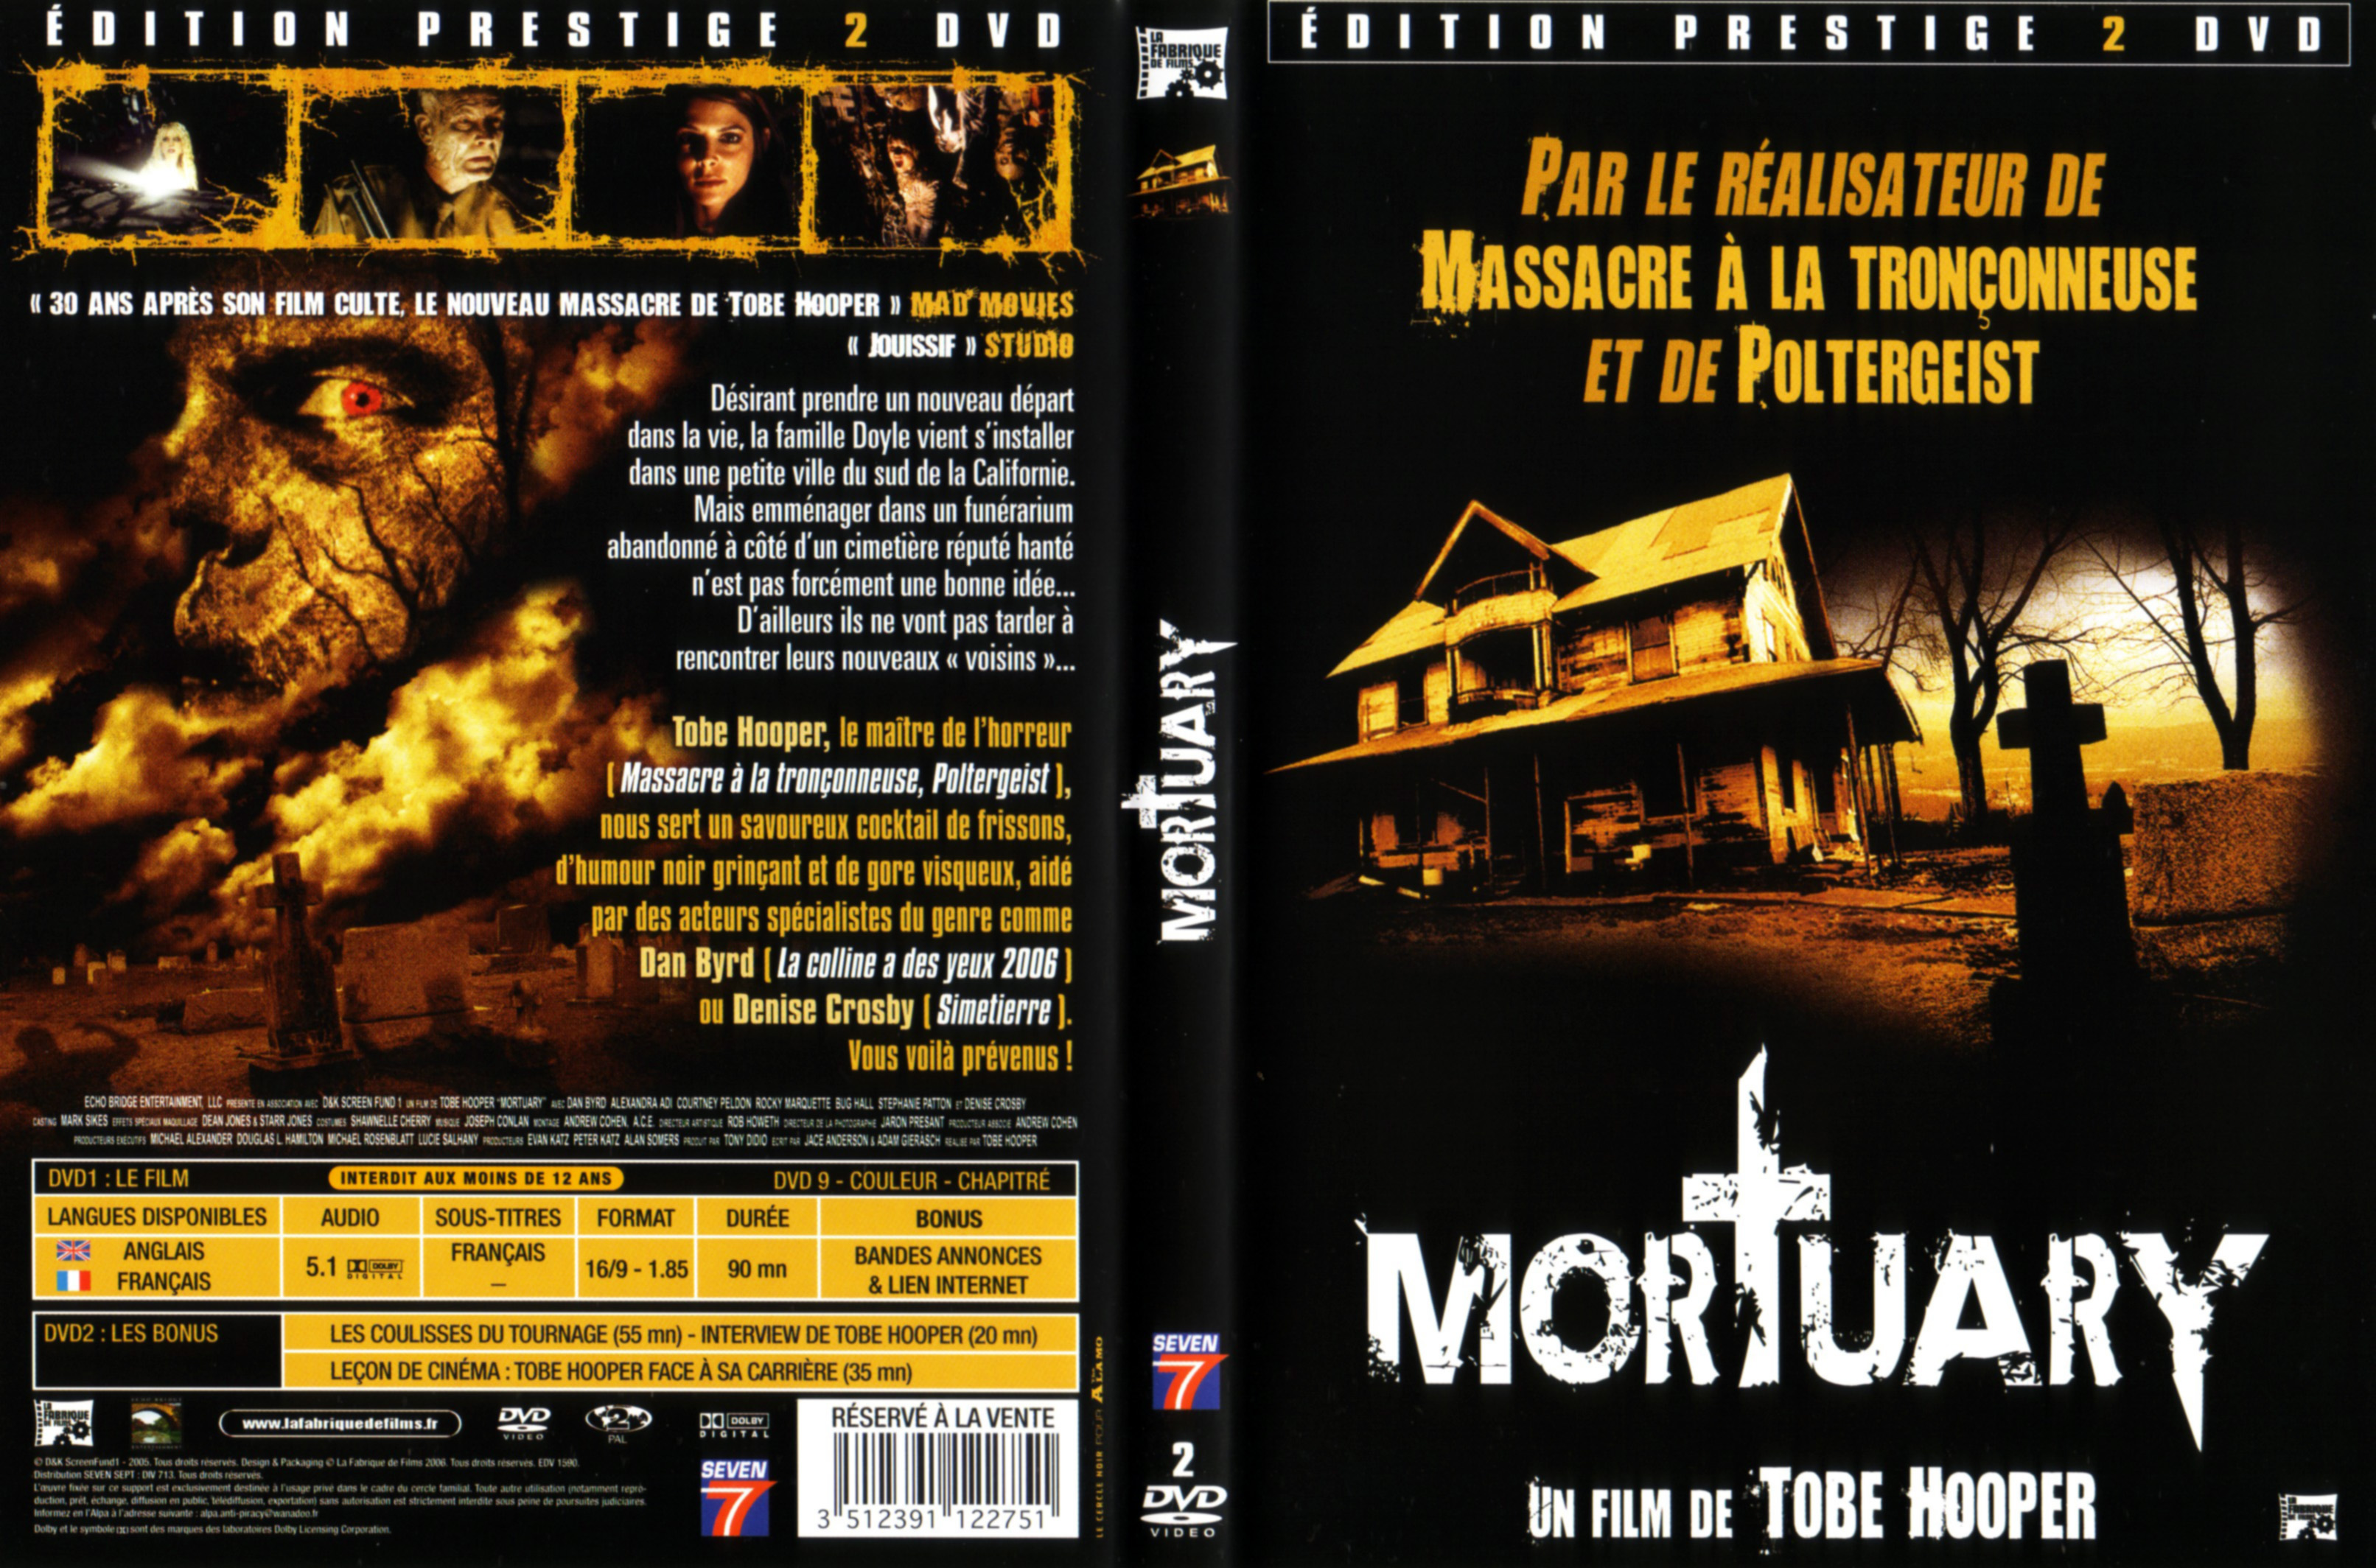 Jaquette DVD Mortuary v2